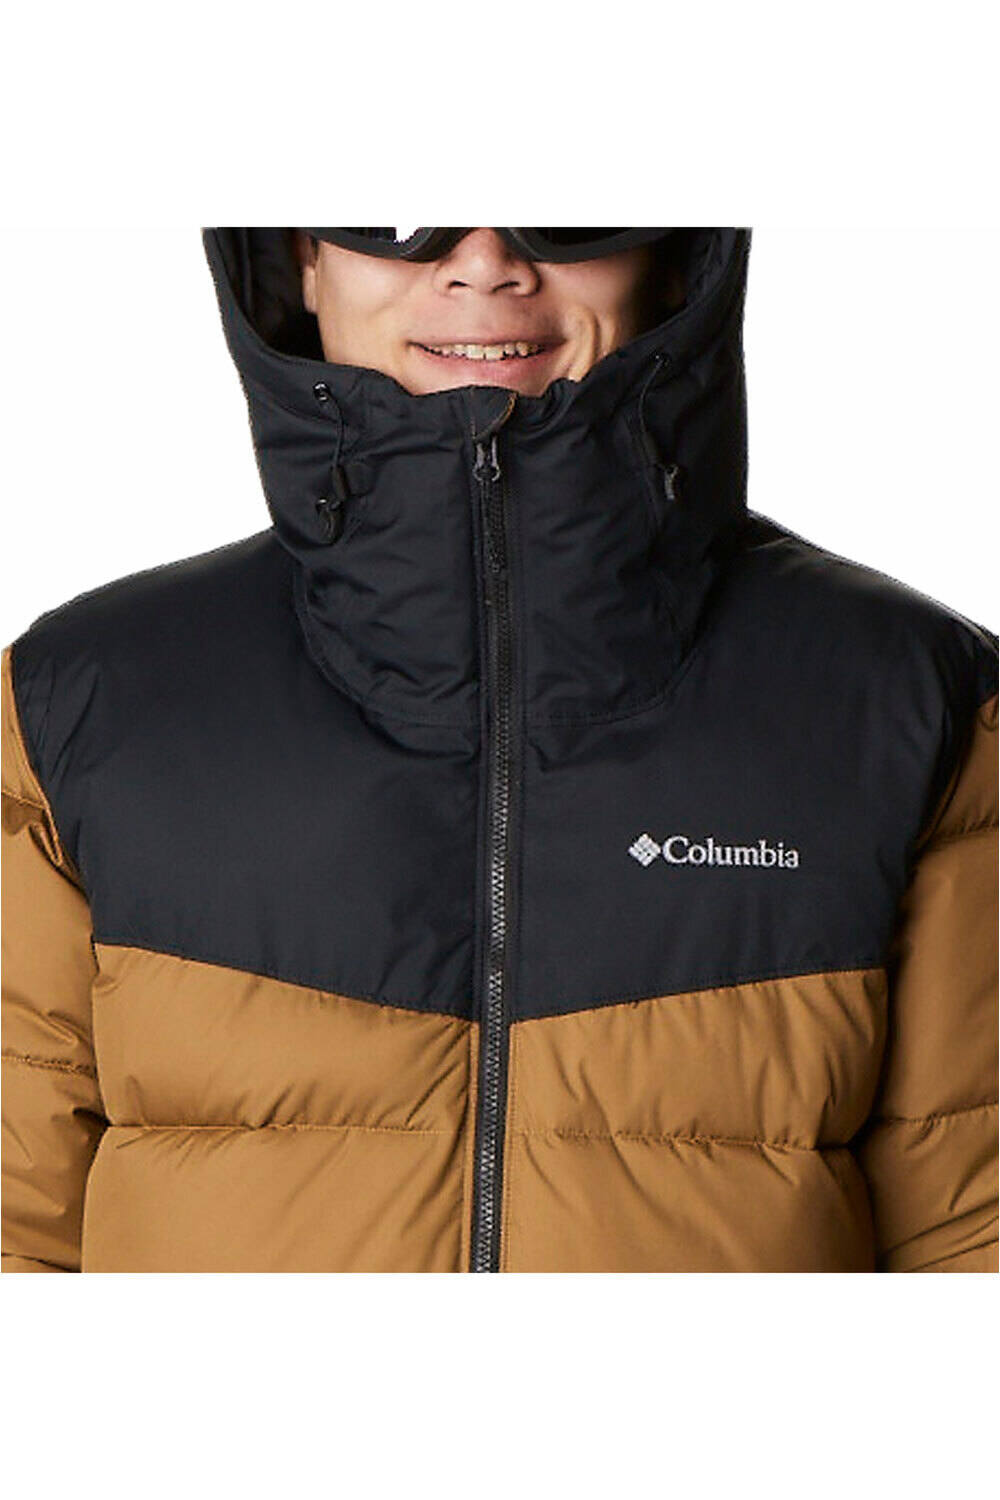 Columbia chaqueta esquí hombre Iceline Ridge Jacket 04